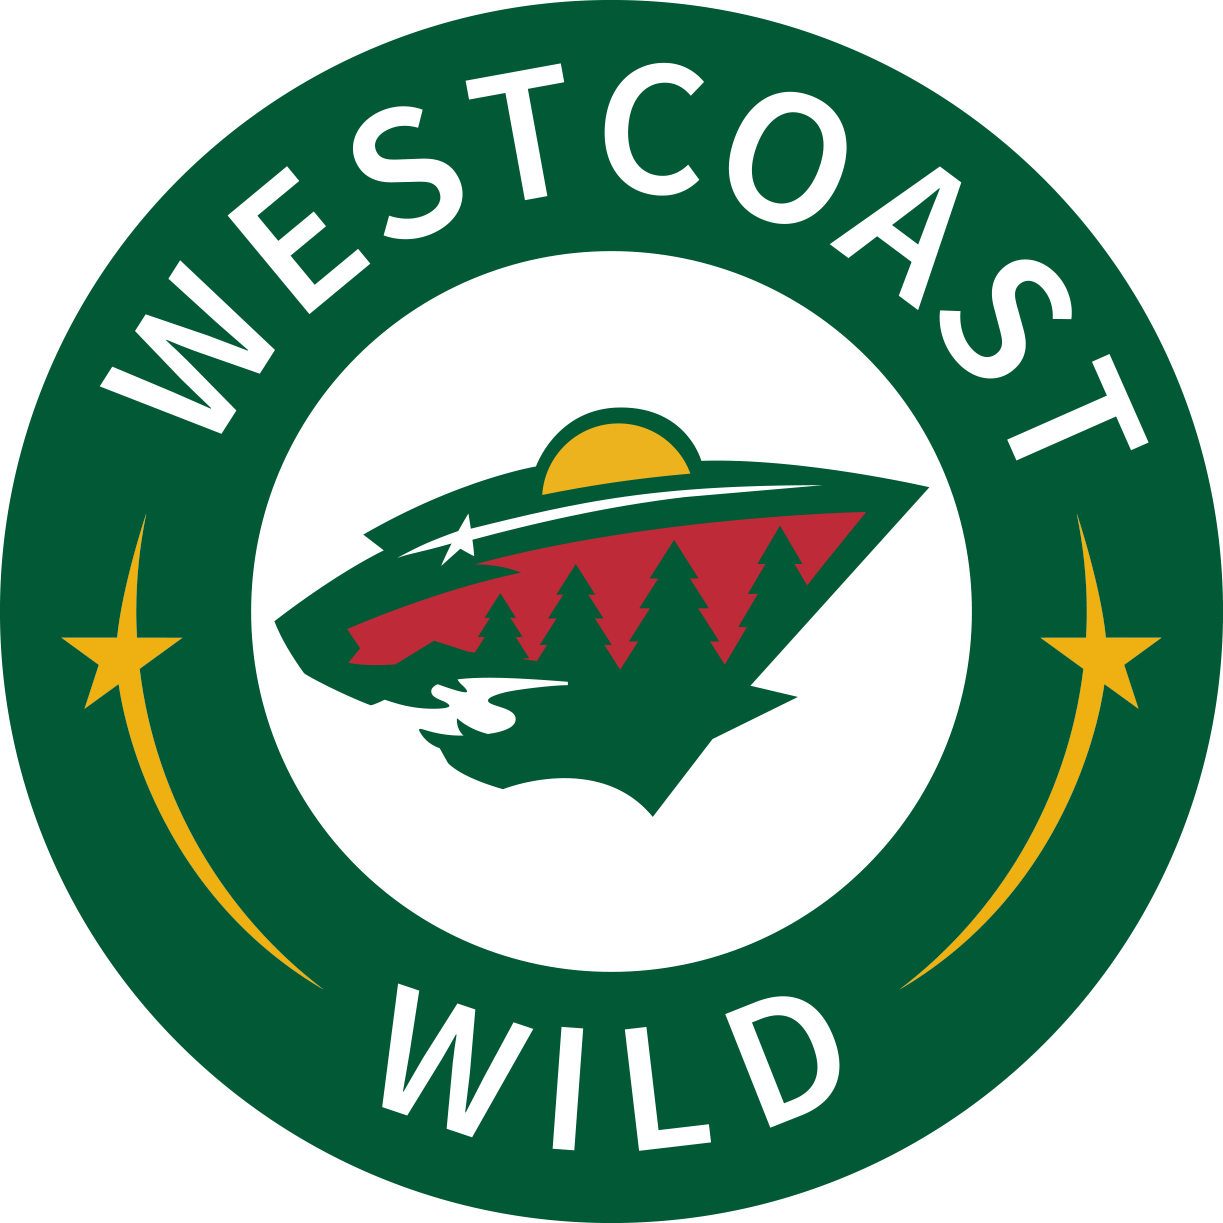 2010 West Coast Wild